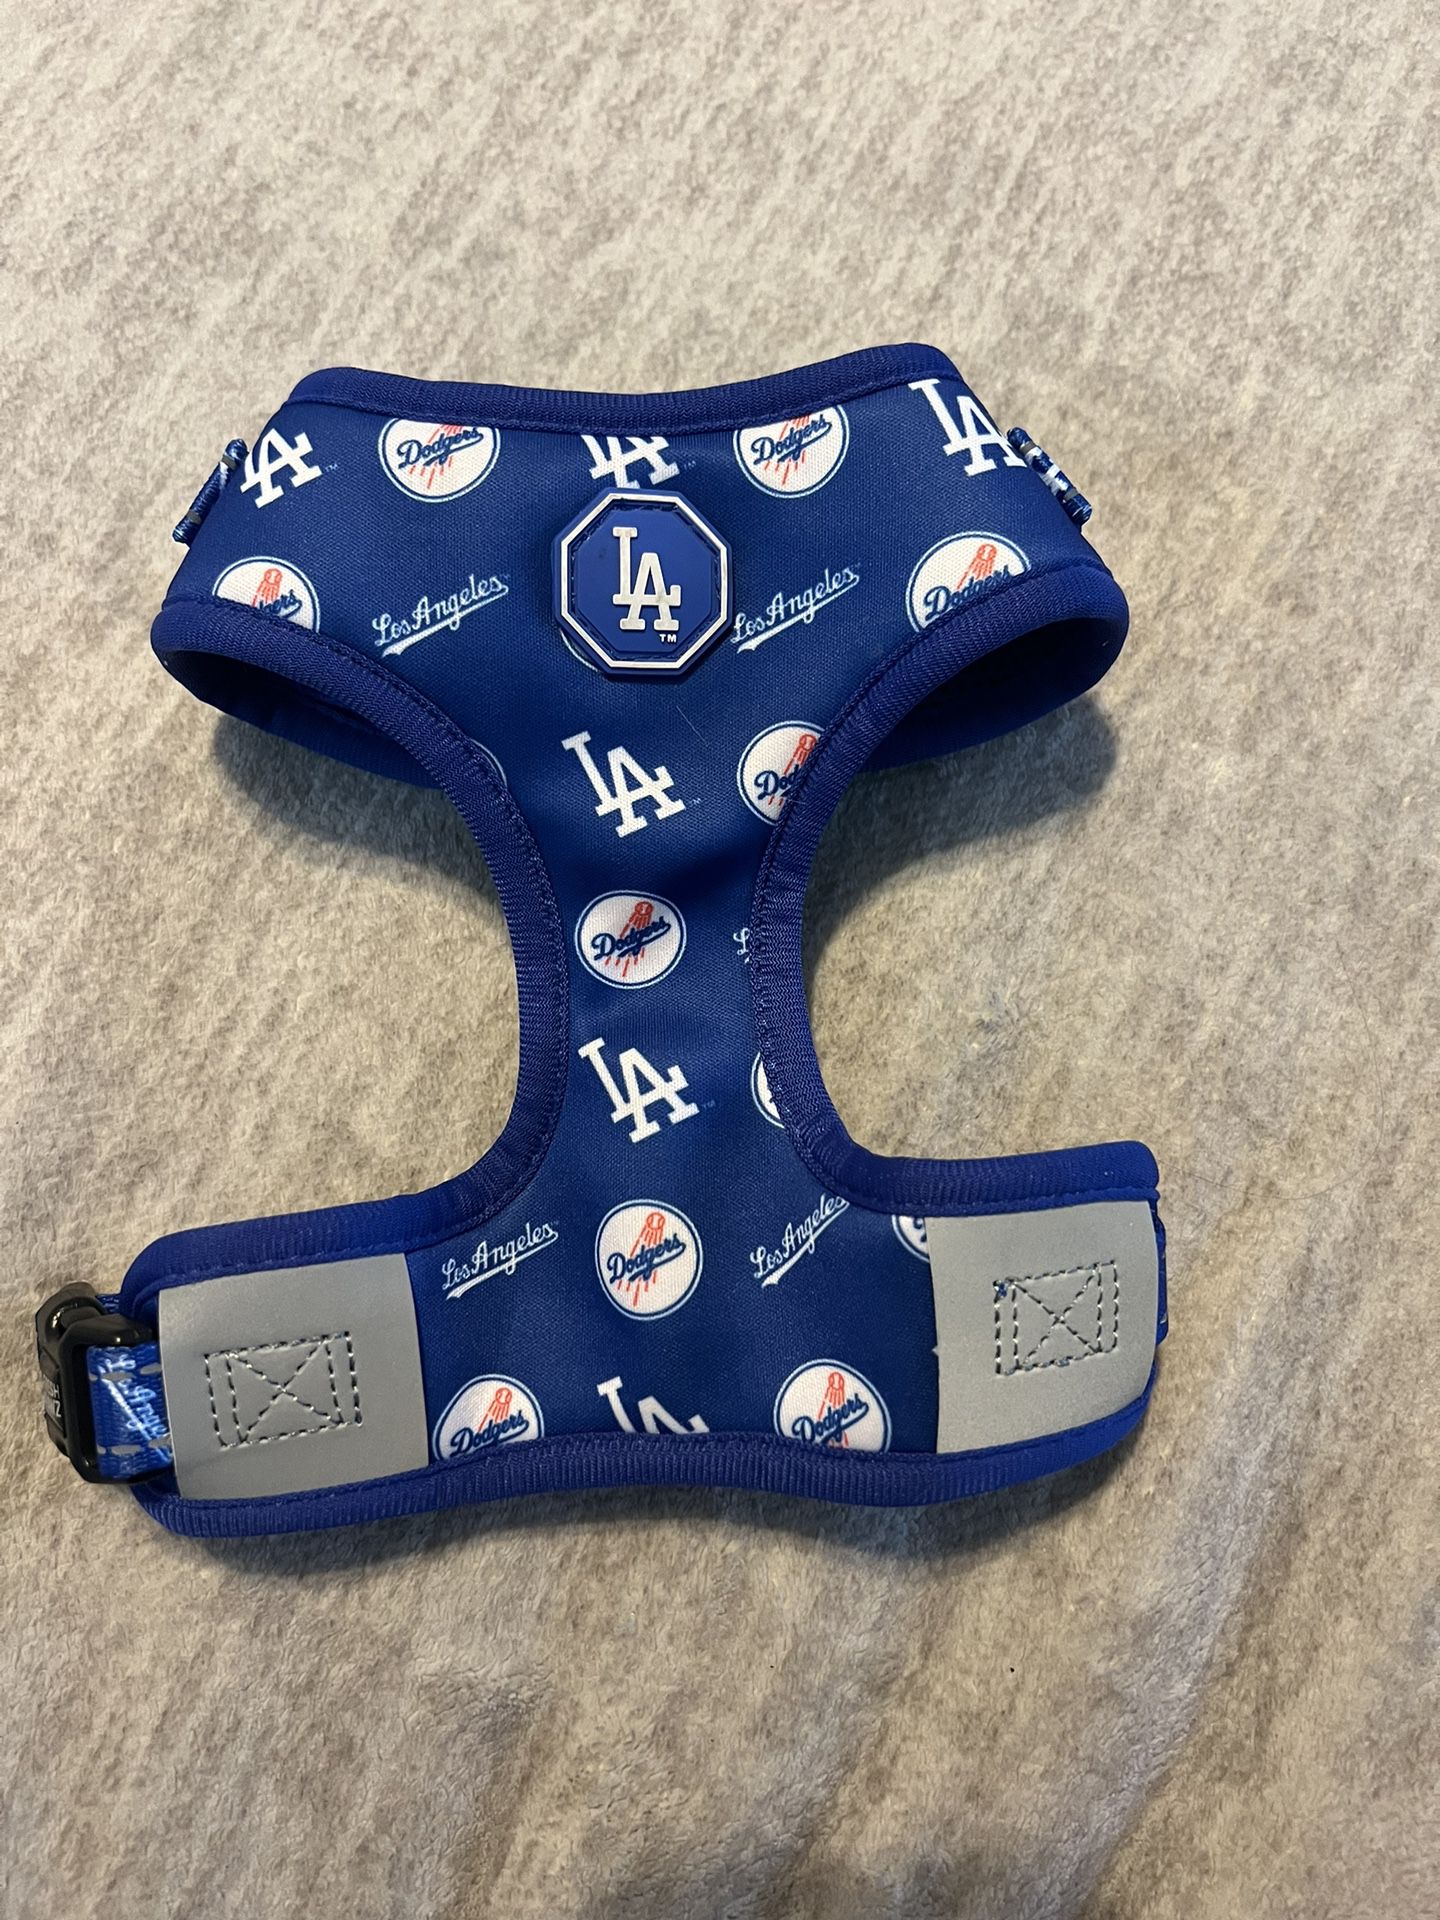 Fresh Pawz X MLB Los Angeles Dodgers Adjustable Mesh Dog Harness, Small